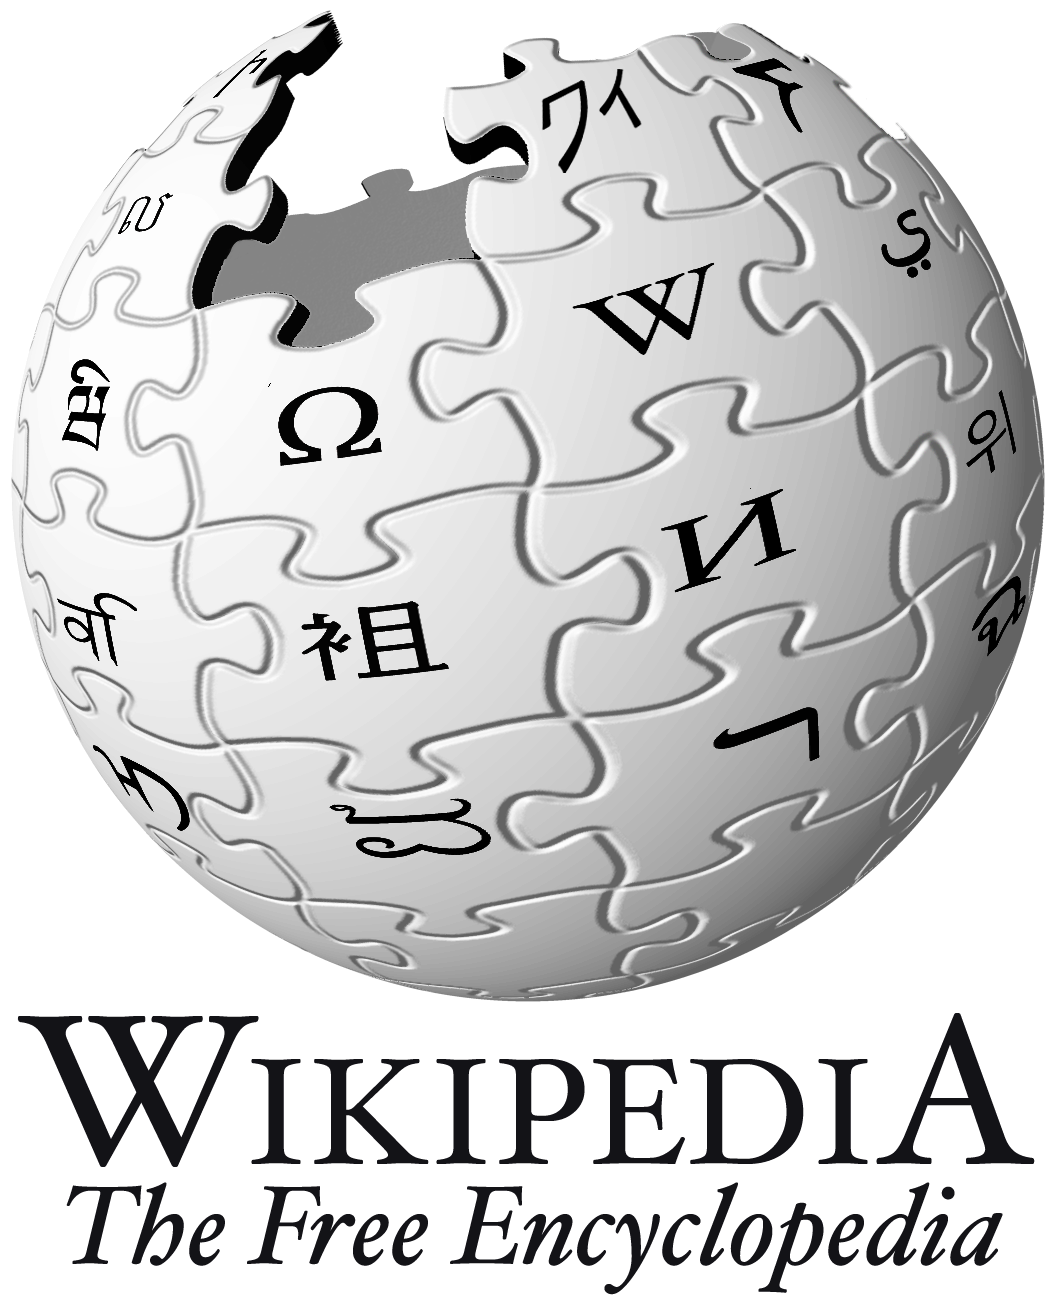 Singerie - Wikipedia, la enciclopedia libre